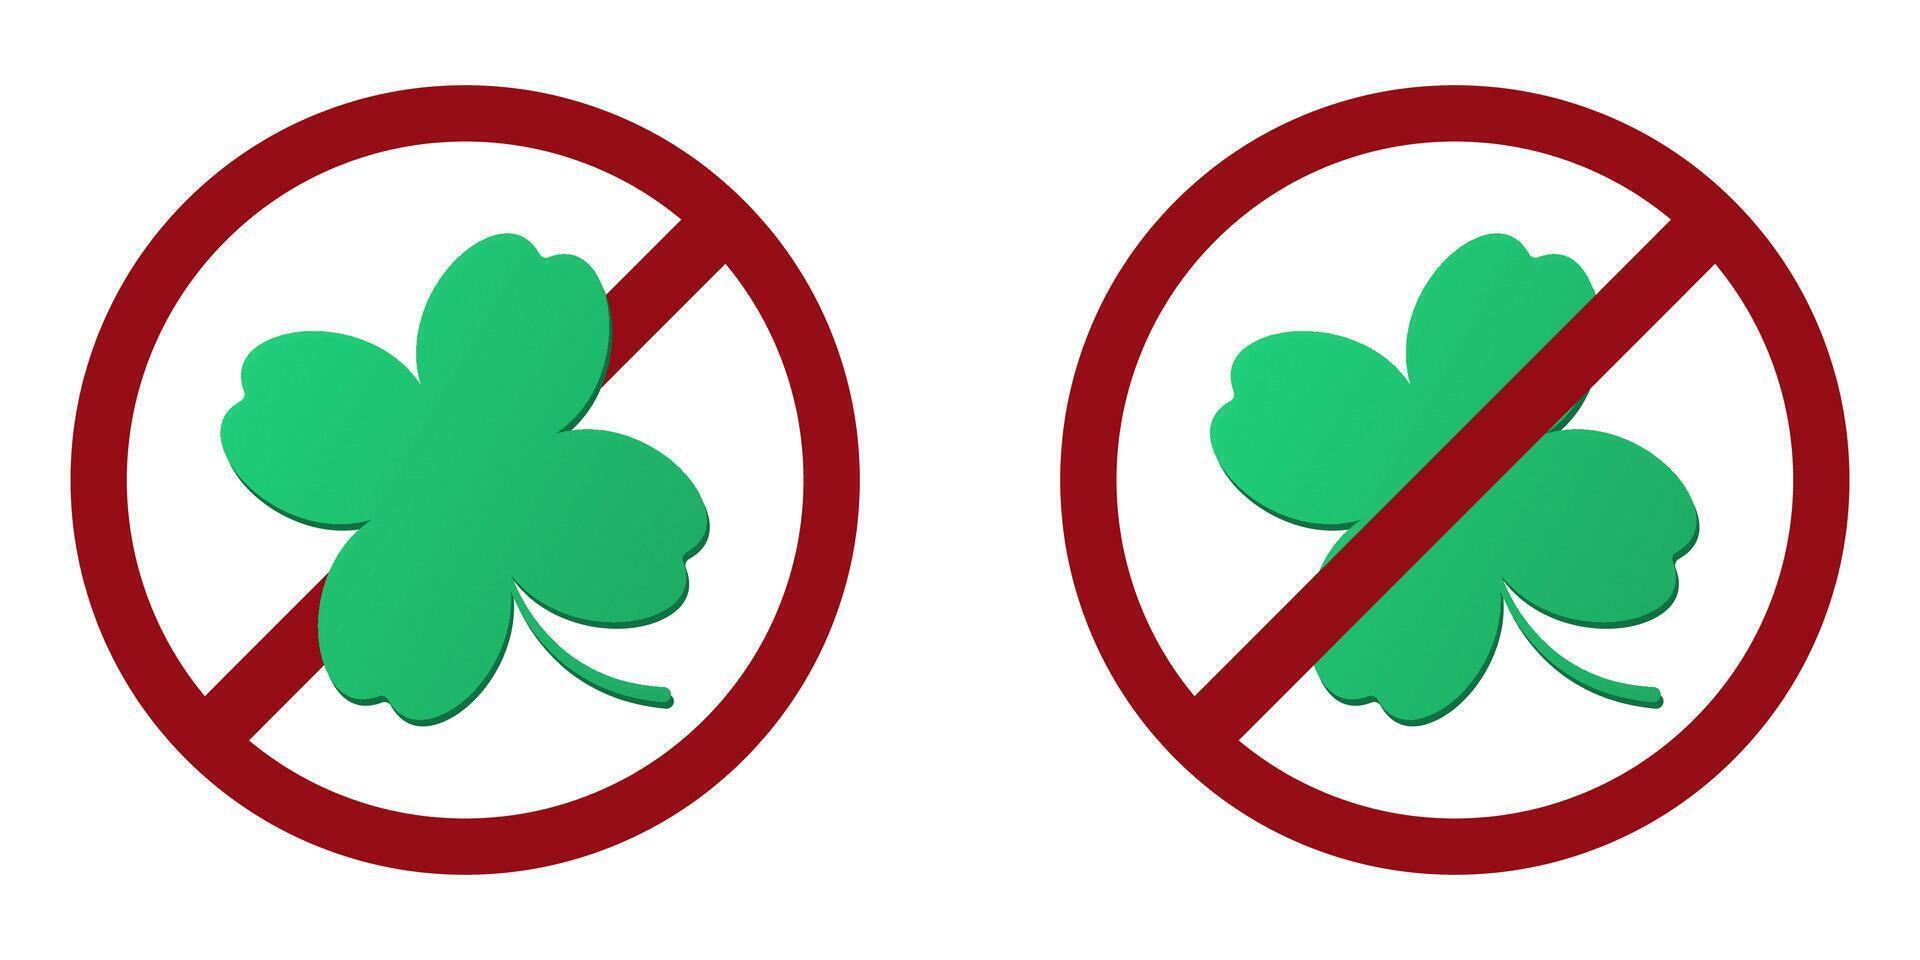 clover ban prohibit icon. Not allowed clover lucky symbol vector